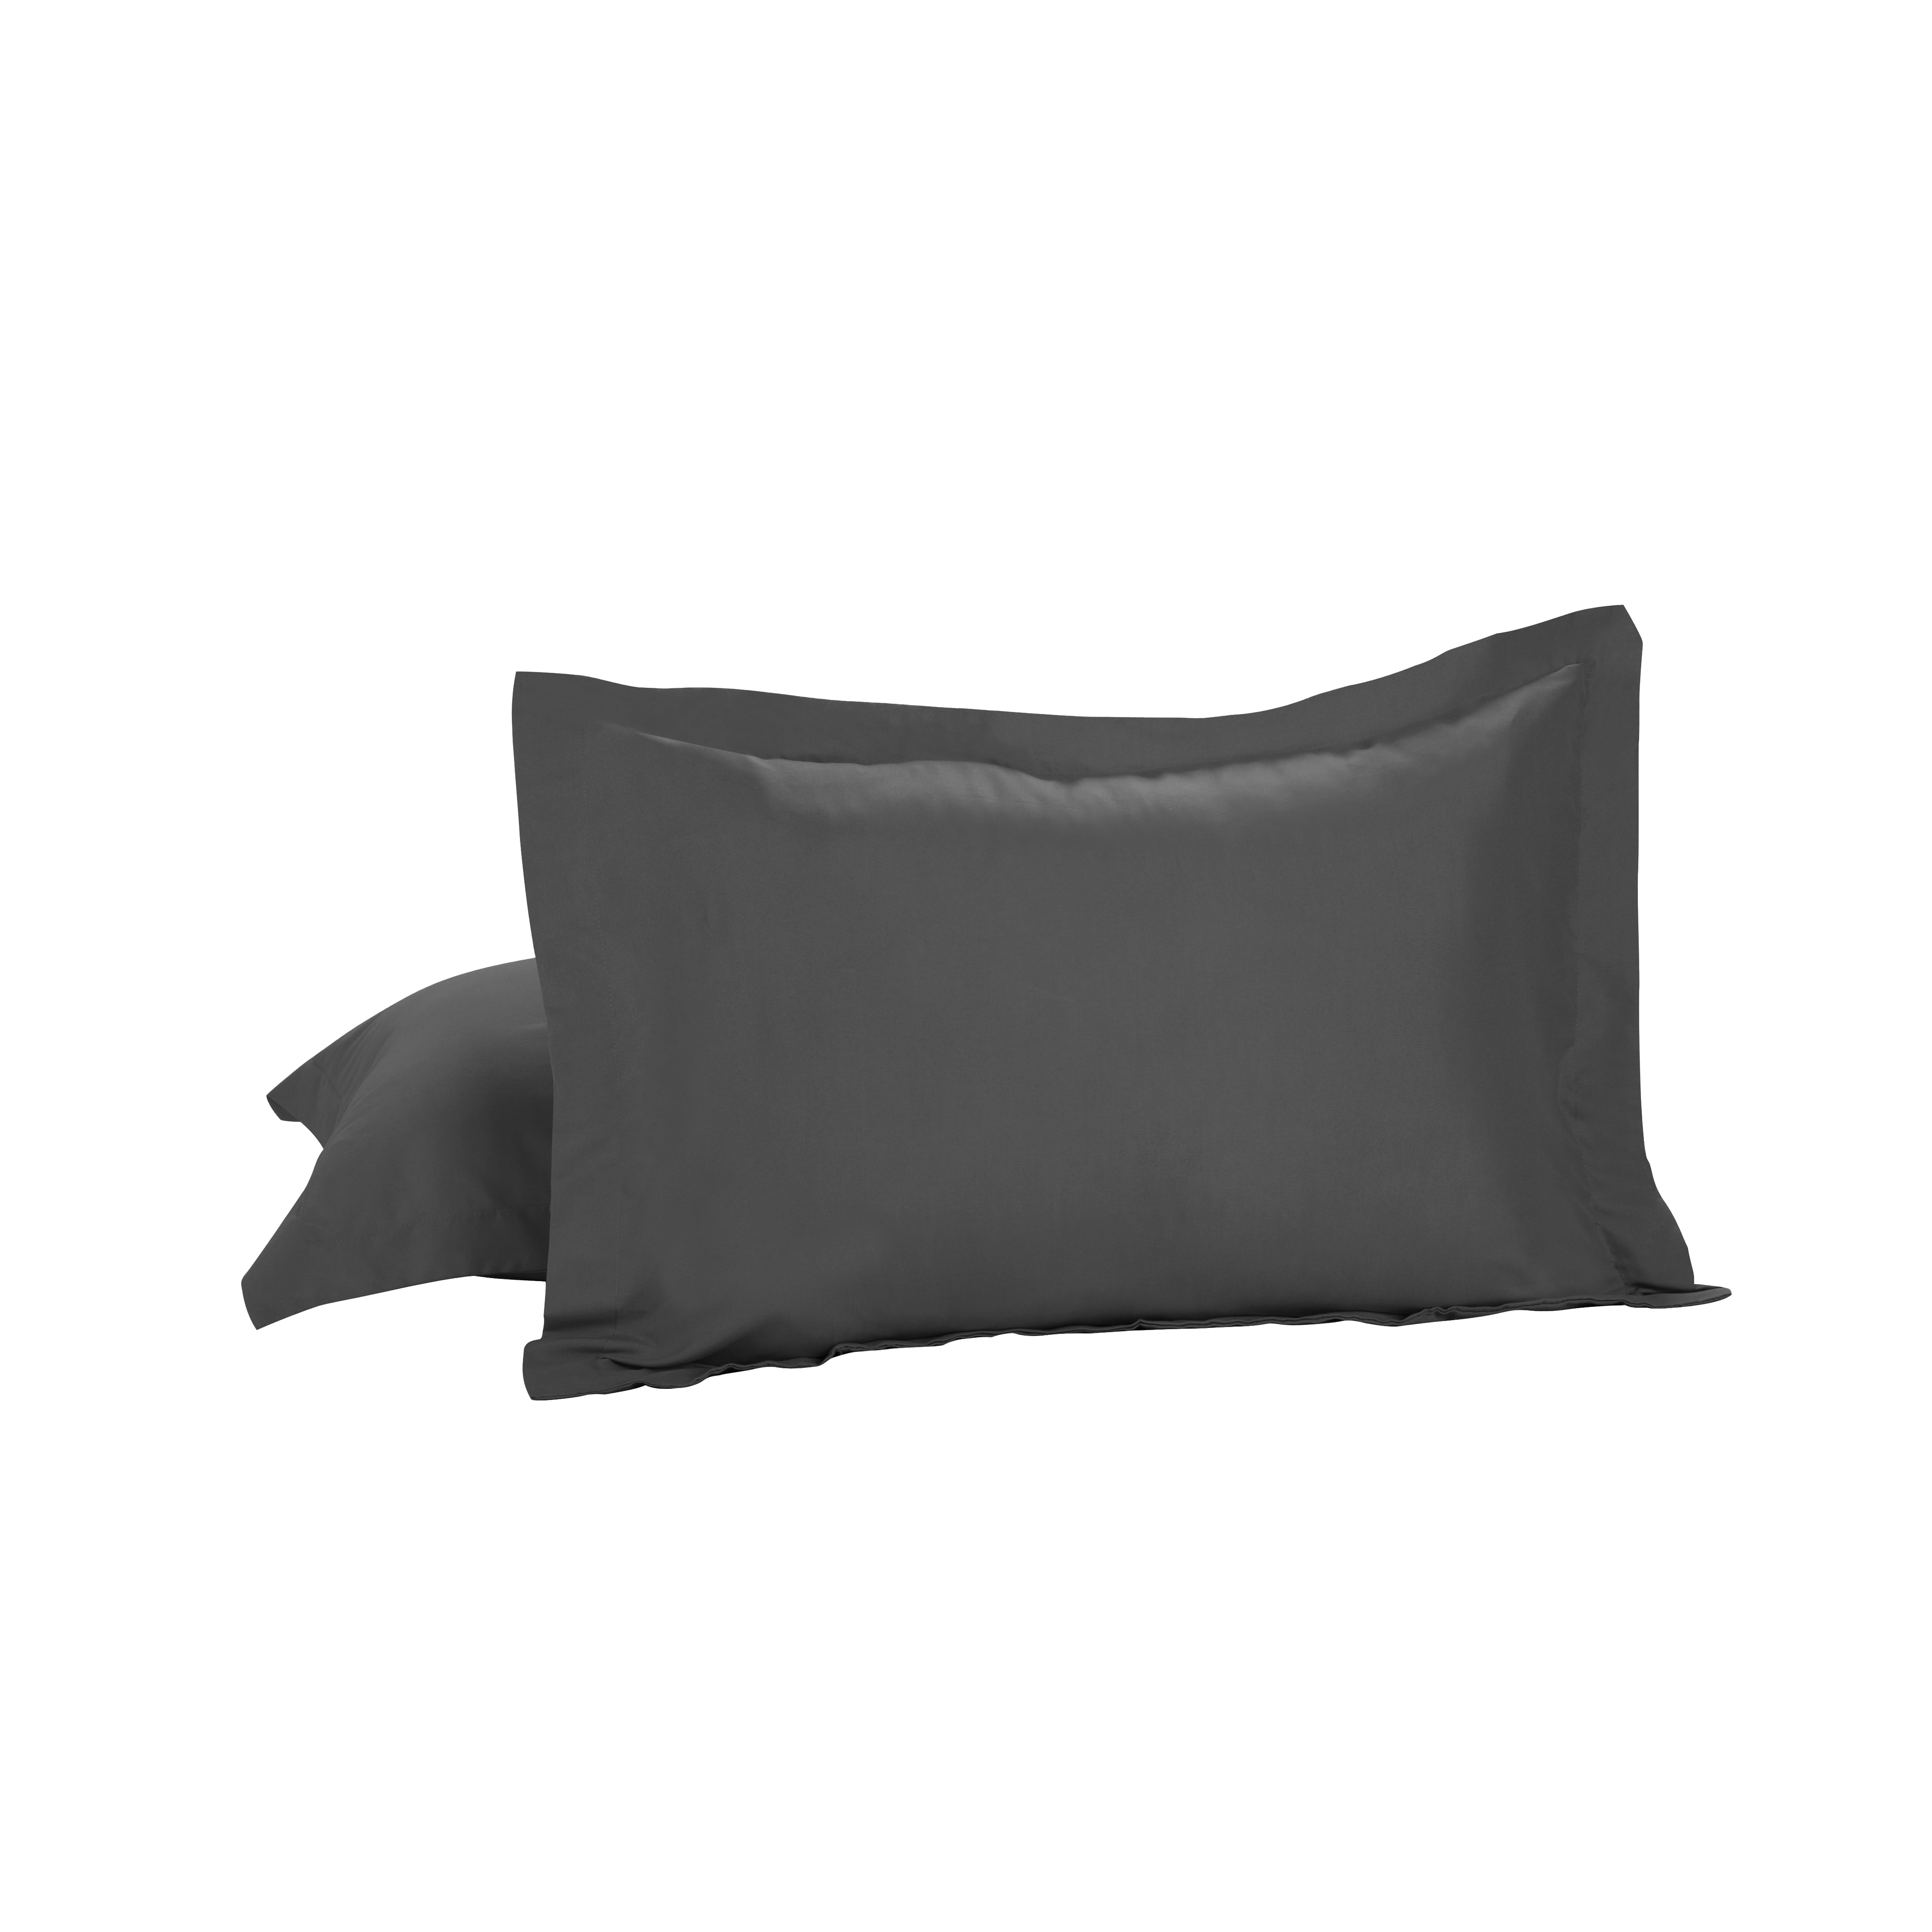 White NEW Tailored Standard Pillow Sham Set 